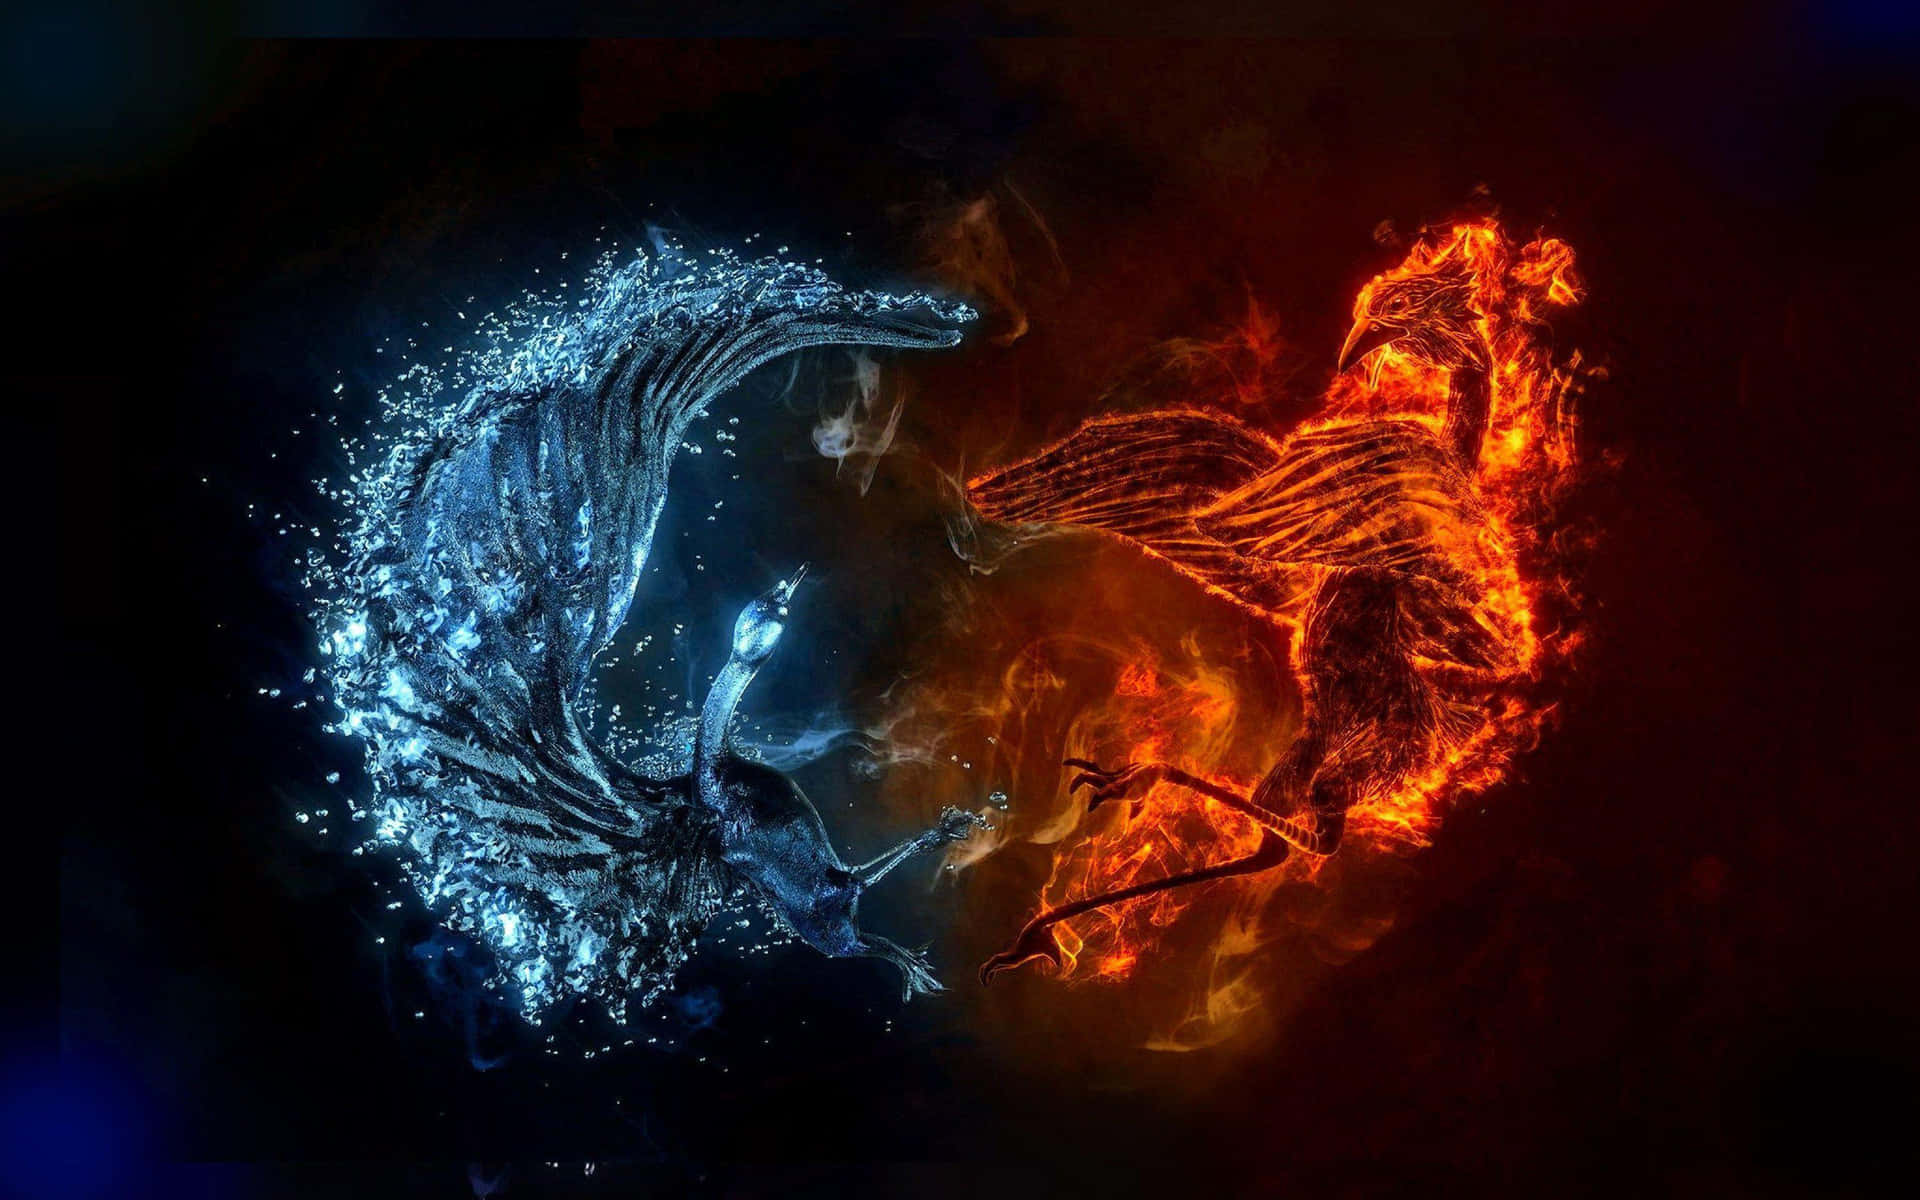 The Flaming Force and Healing Aqua Wallpaper